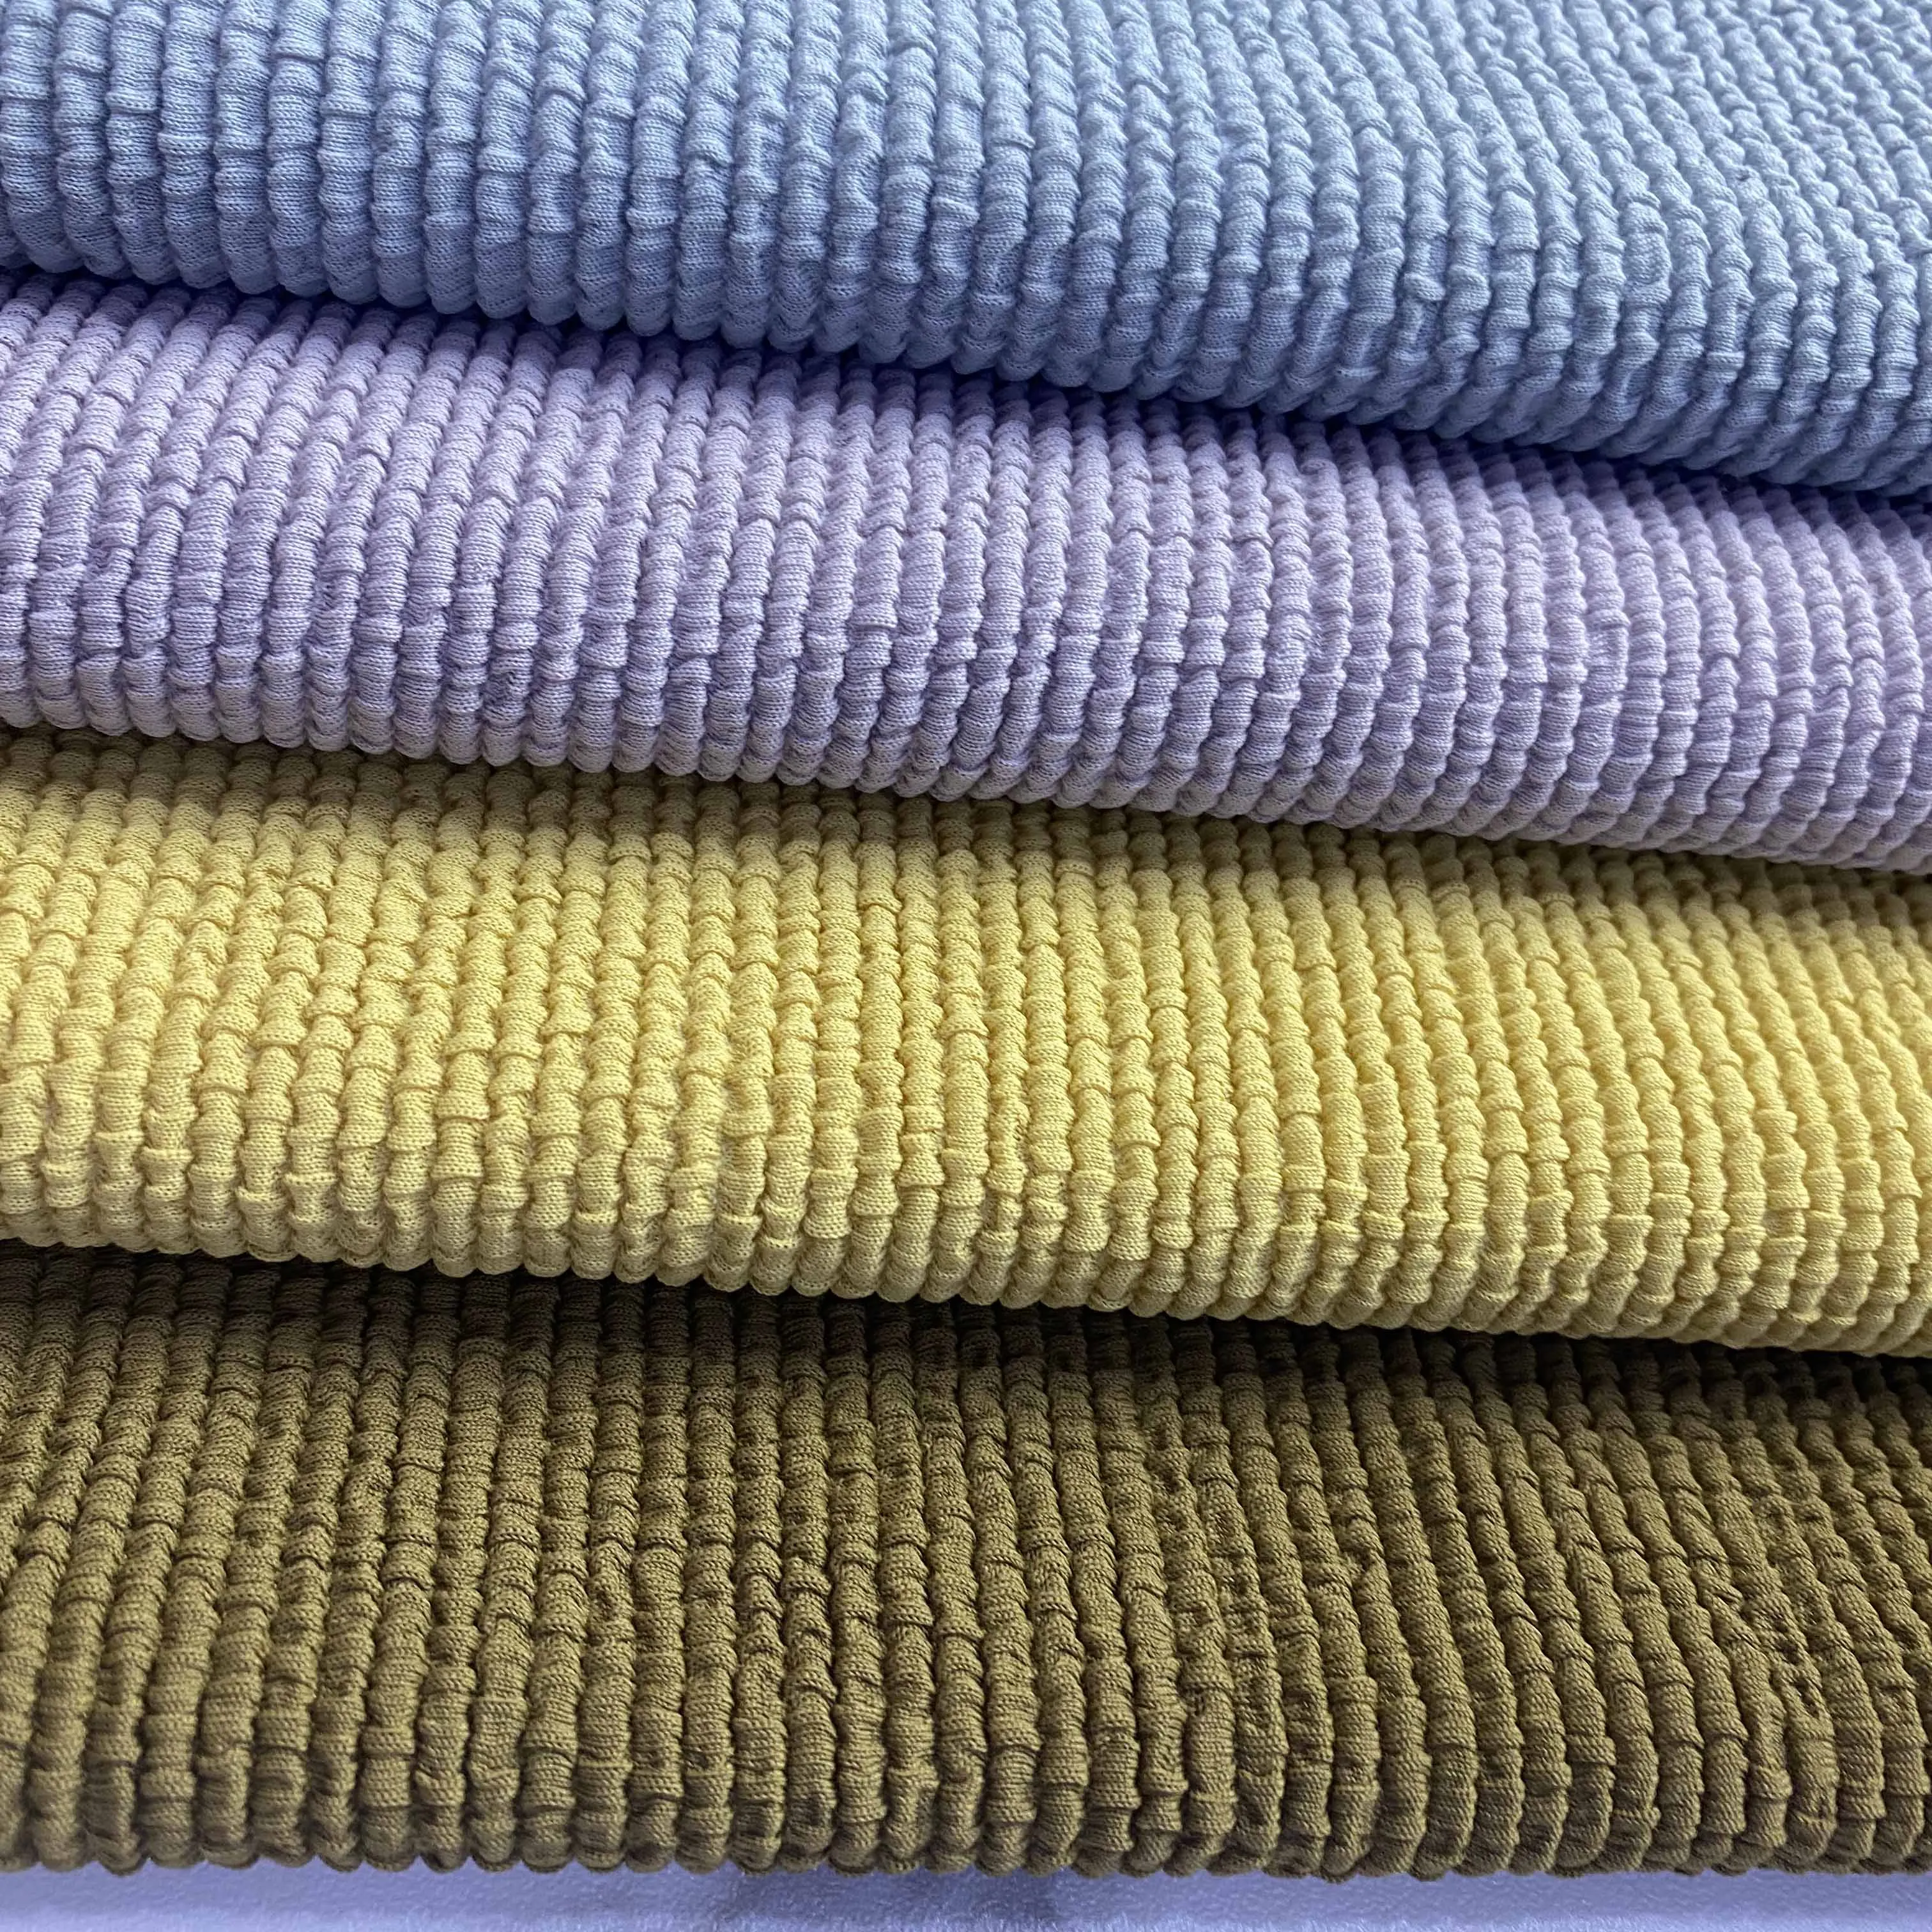 
weft knitted seersucker 4 way stretch nylon lycra texture fabric swimwear 